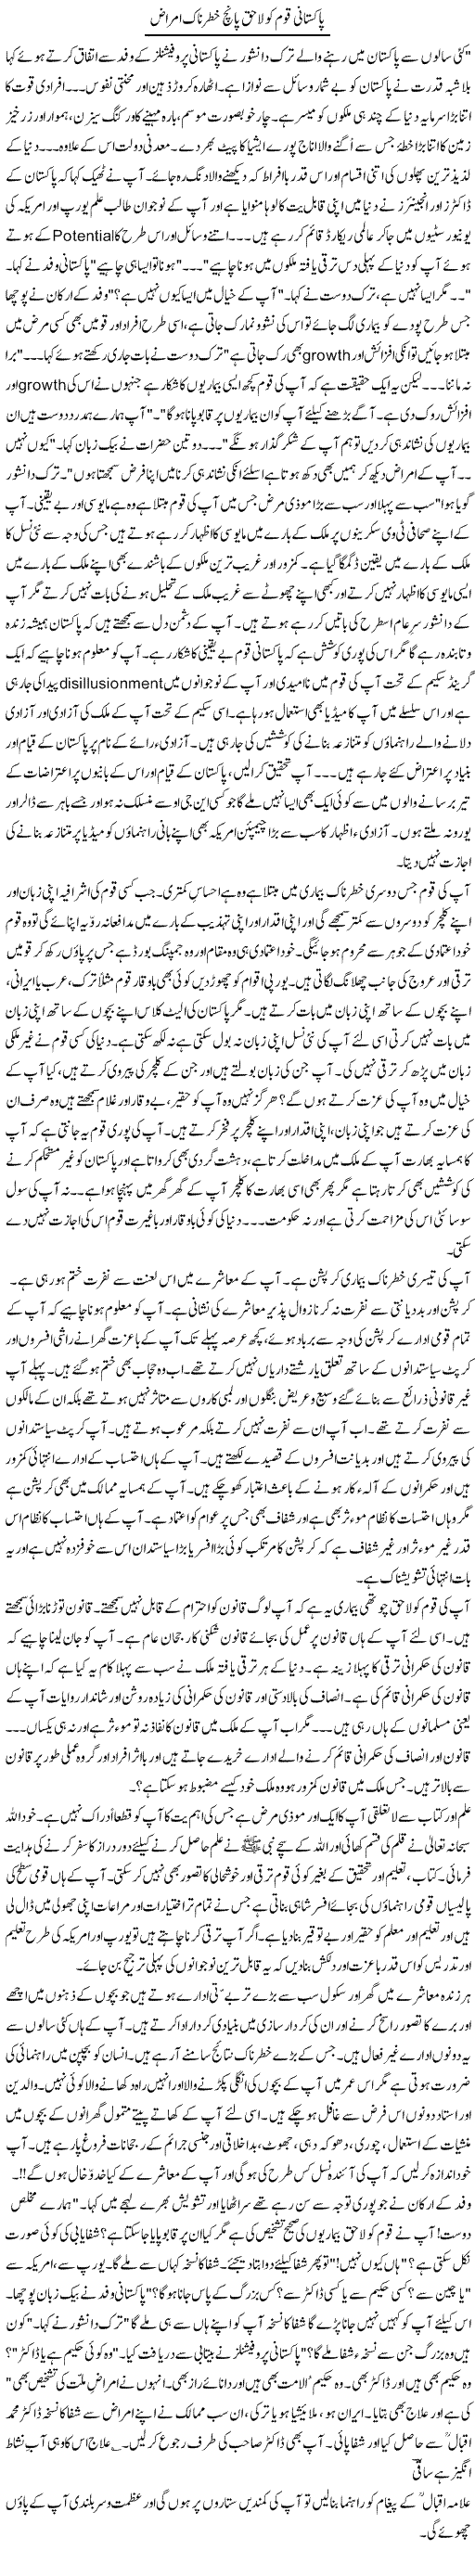 Pakistani Qoum Ko Lahaq Paanch Khatarnaak Amraaz | Zulfiqar Ahmed Cheema | Daily Urdu Columns